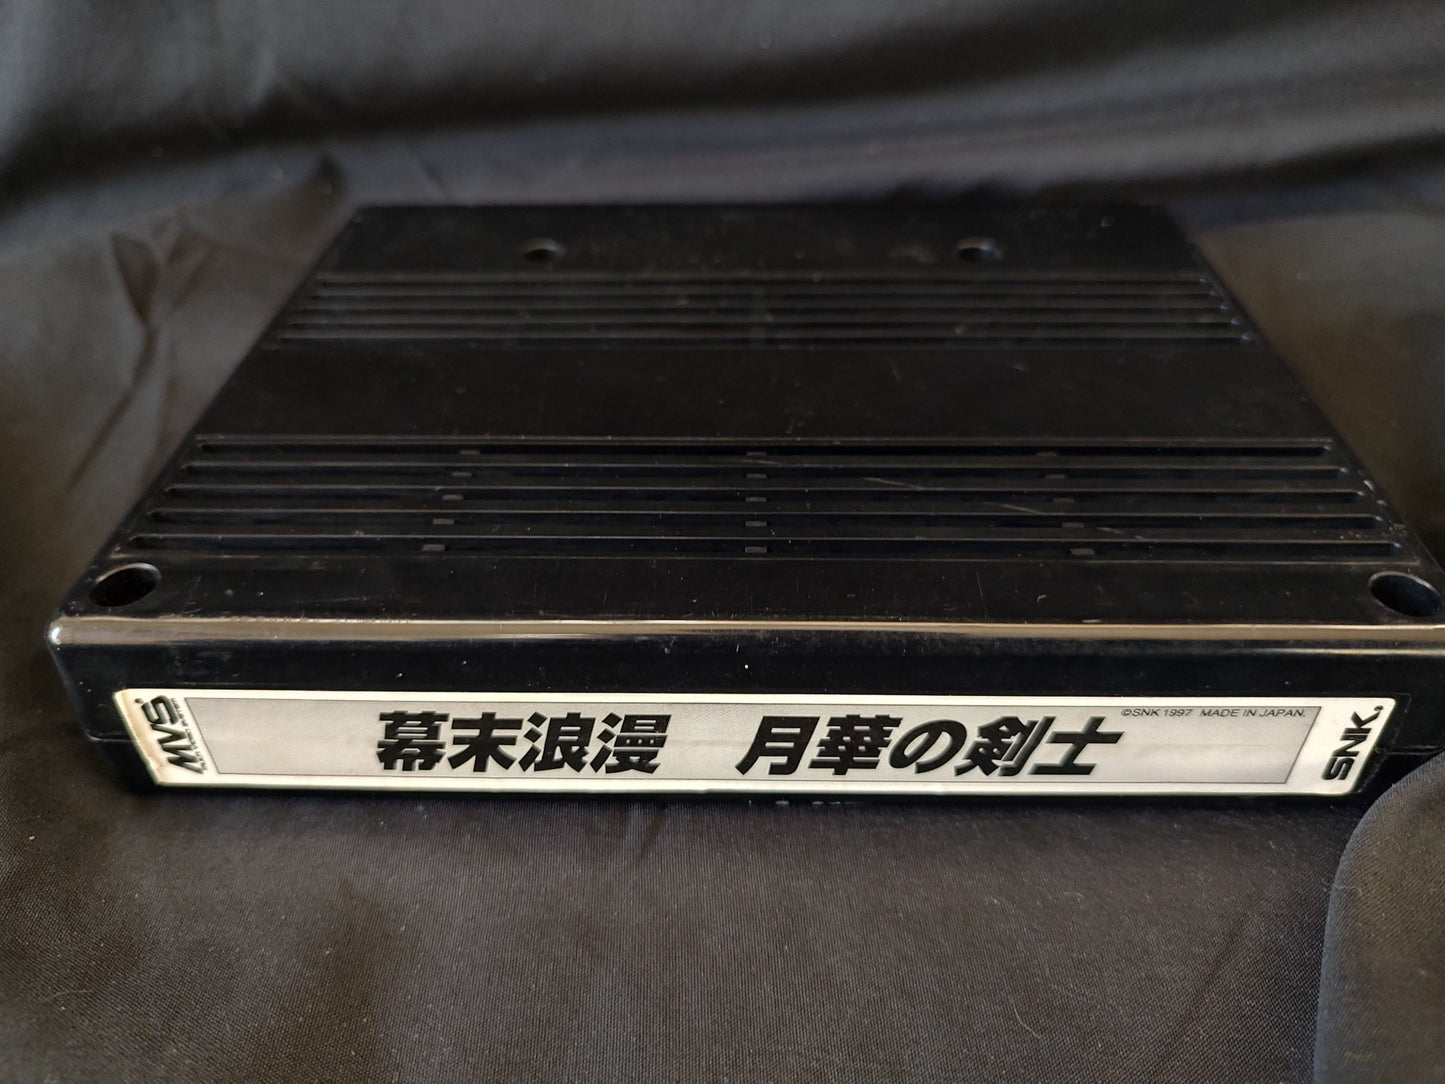 THE LAST BLADE (Gekka no Kenshi ) NEOGEO NEO GEO MVS Cartridge tested -f1225-